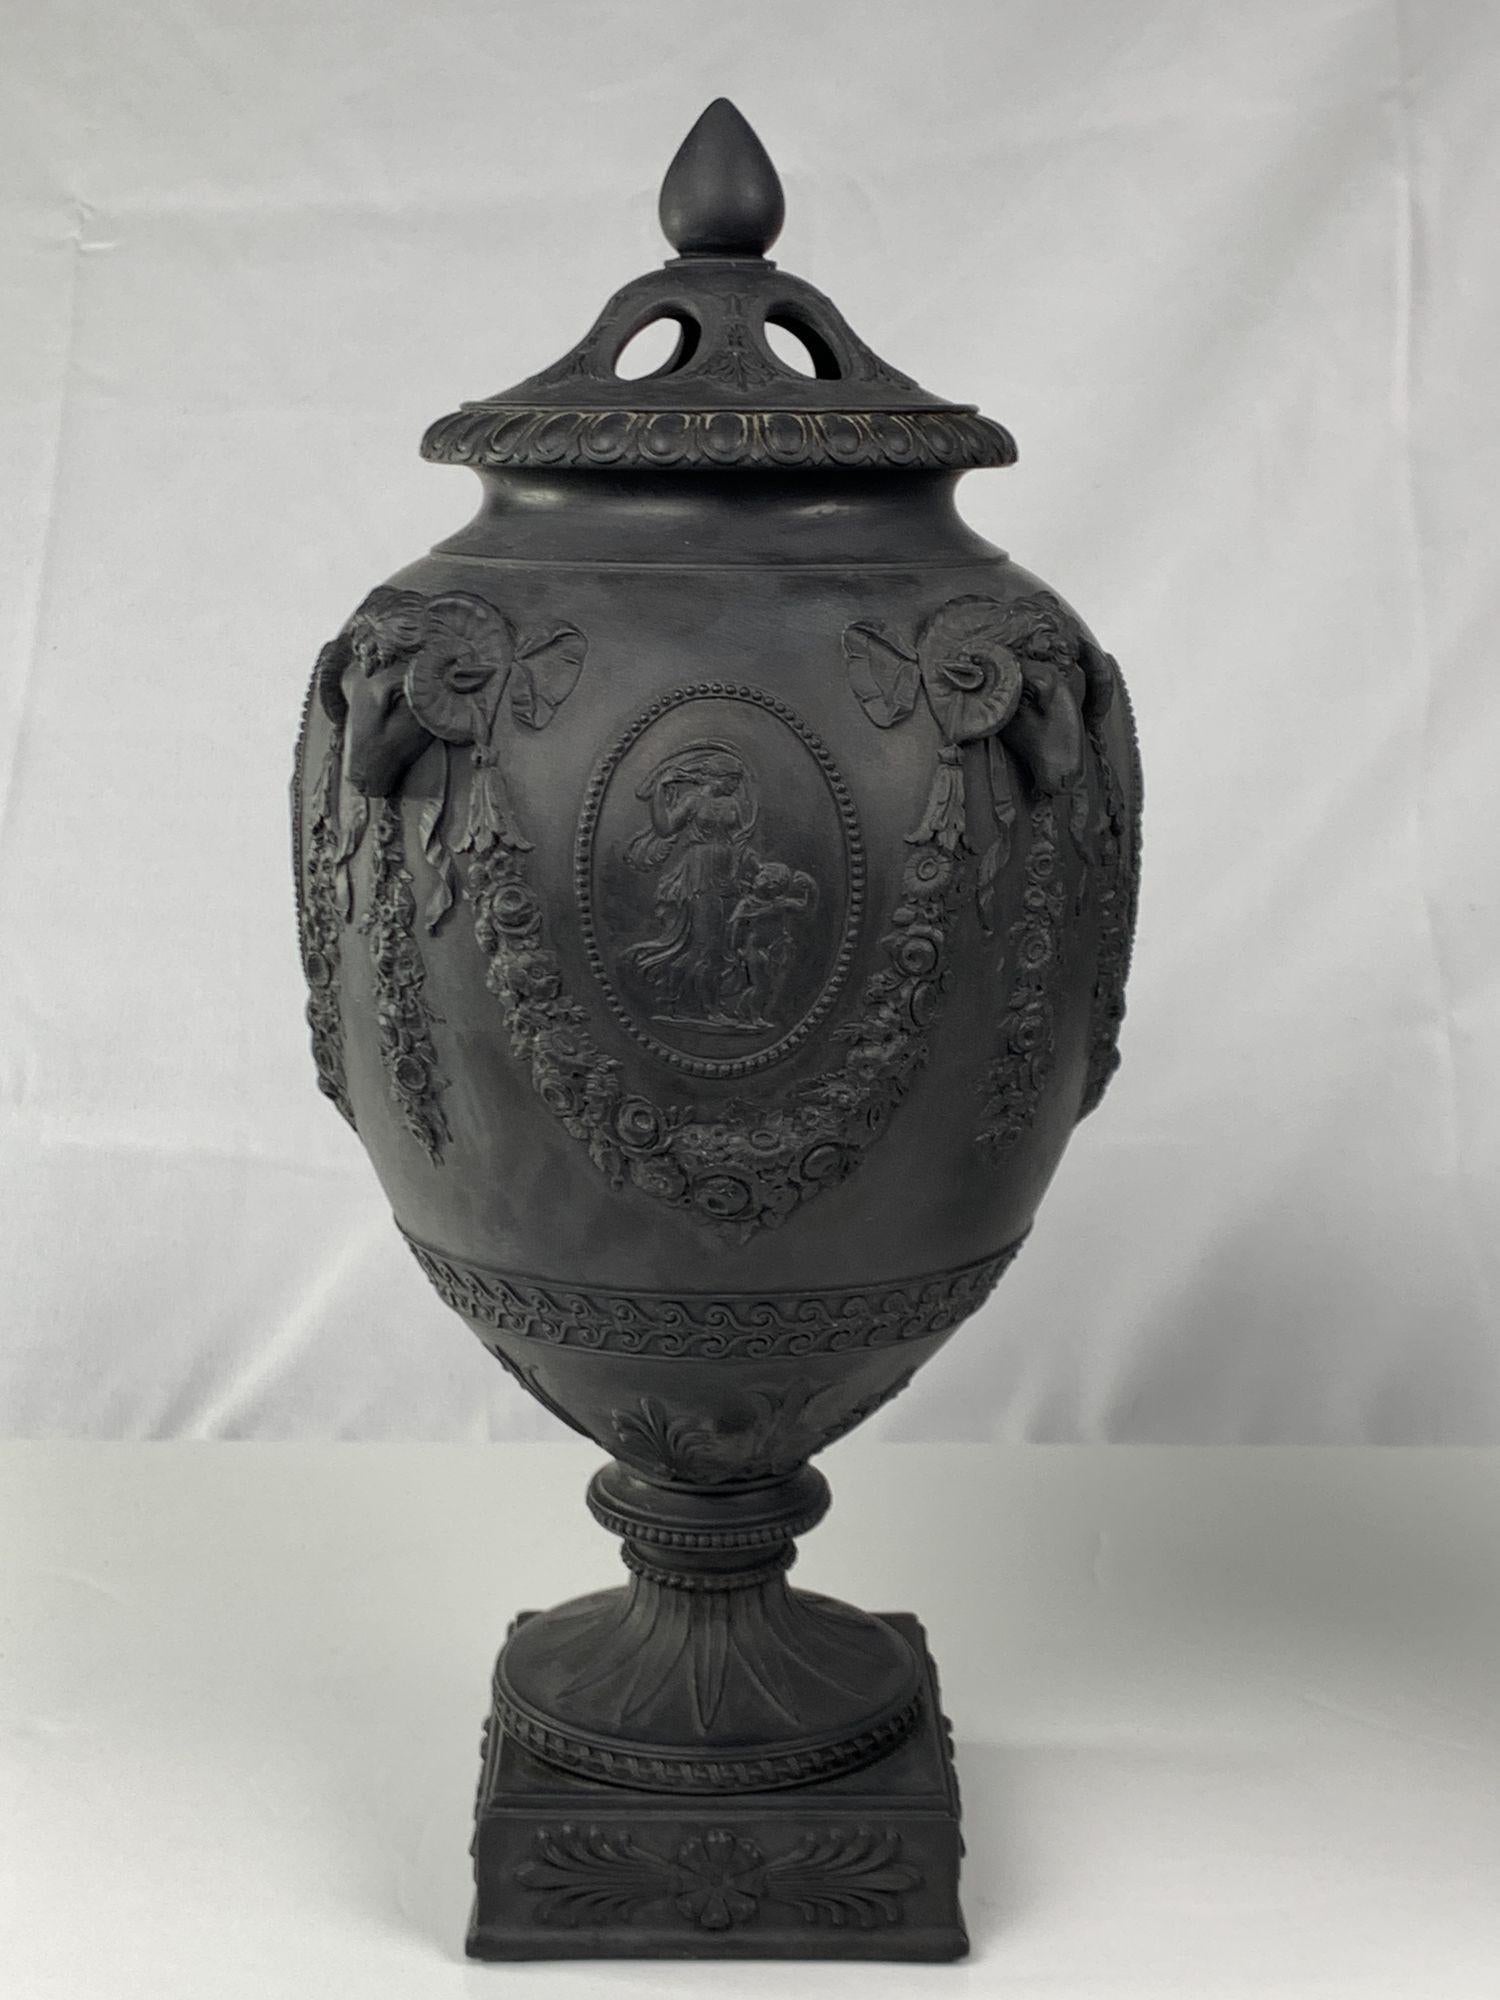 English Pair Wedgwood Black Basalt Urn Neoclassical Made in England Circa 1840